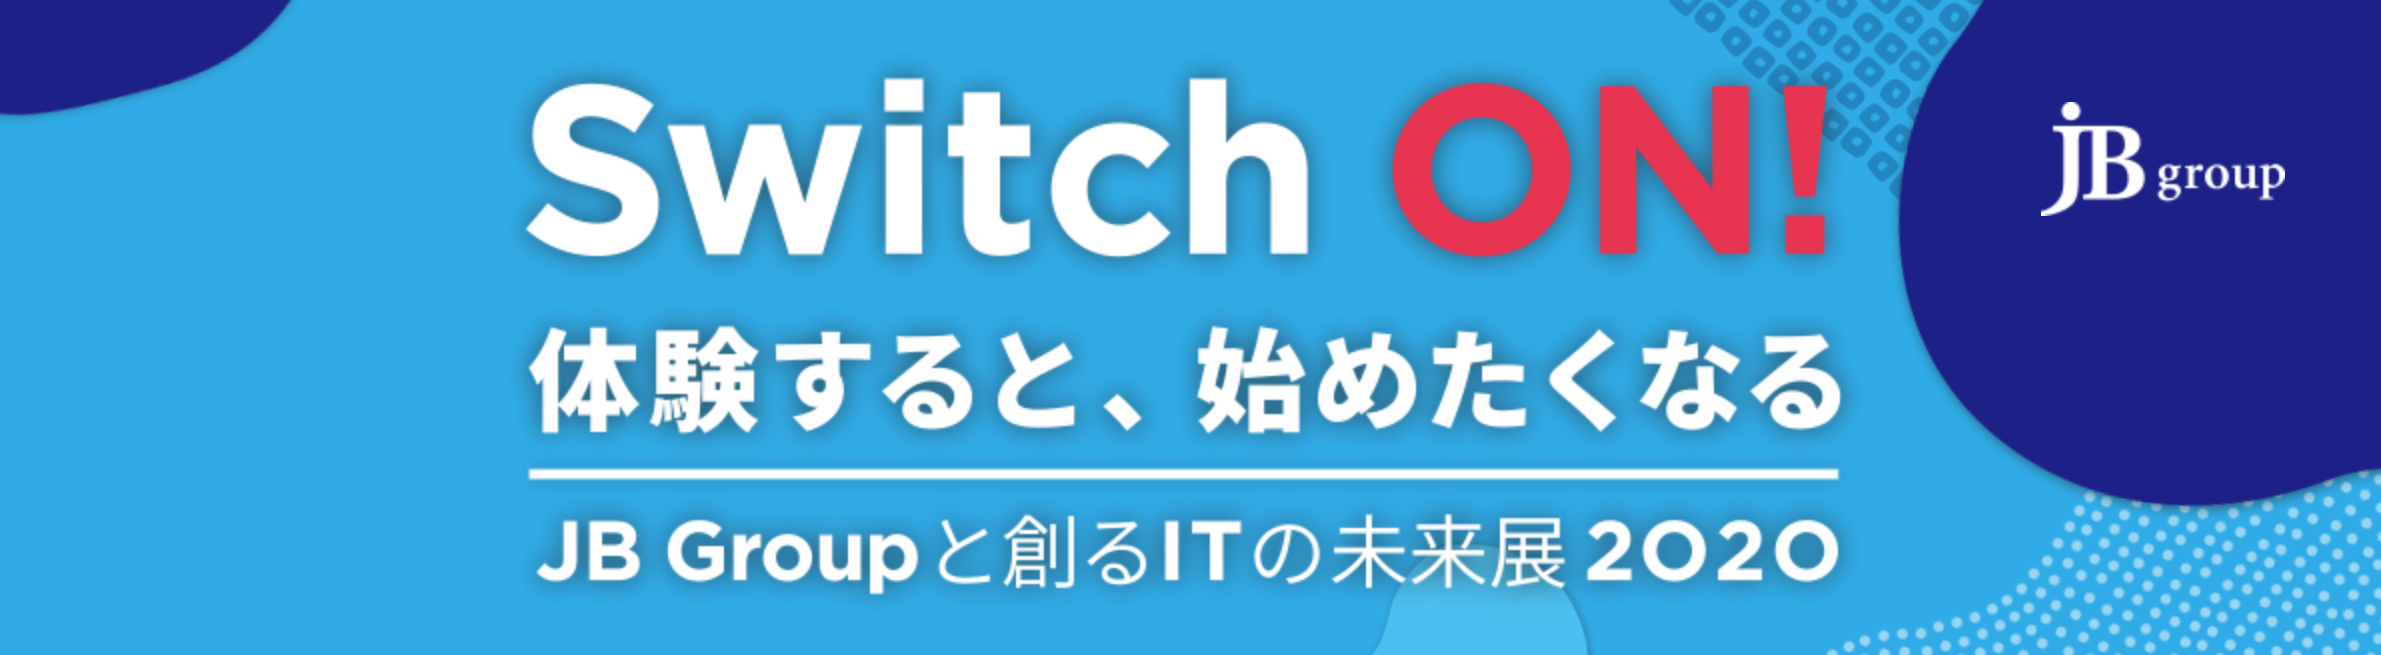 Switch ON!「JB Groupと創るITの未来展 2020」